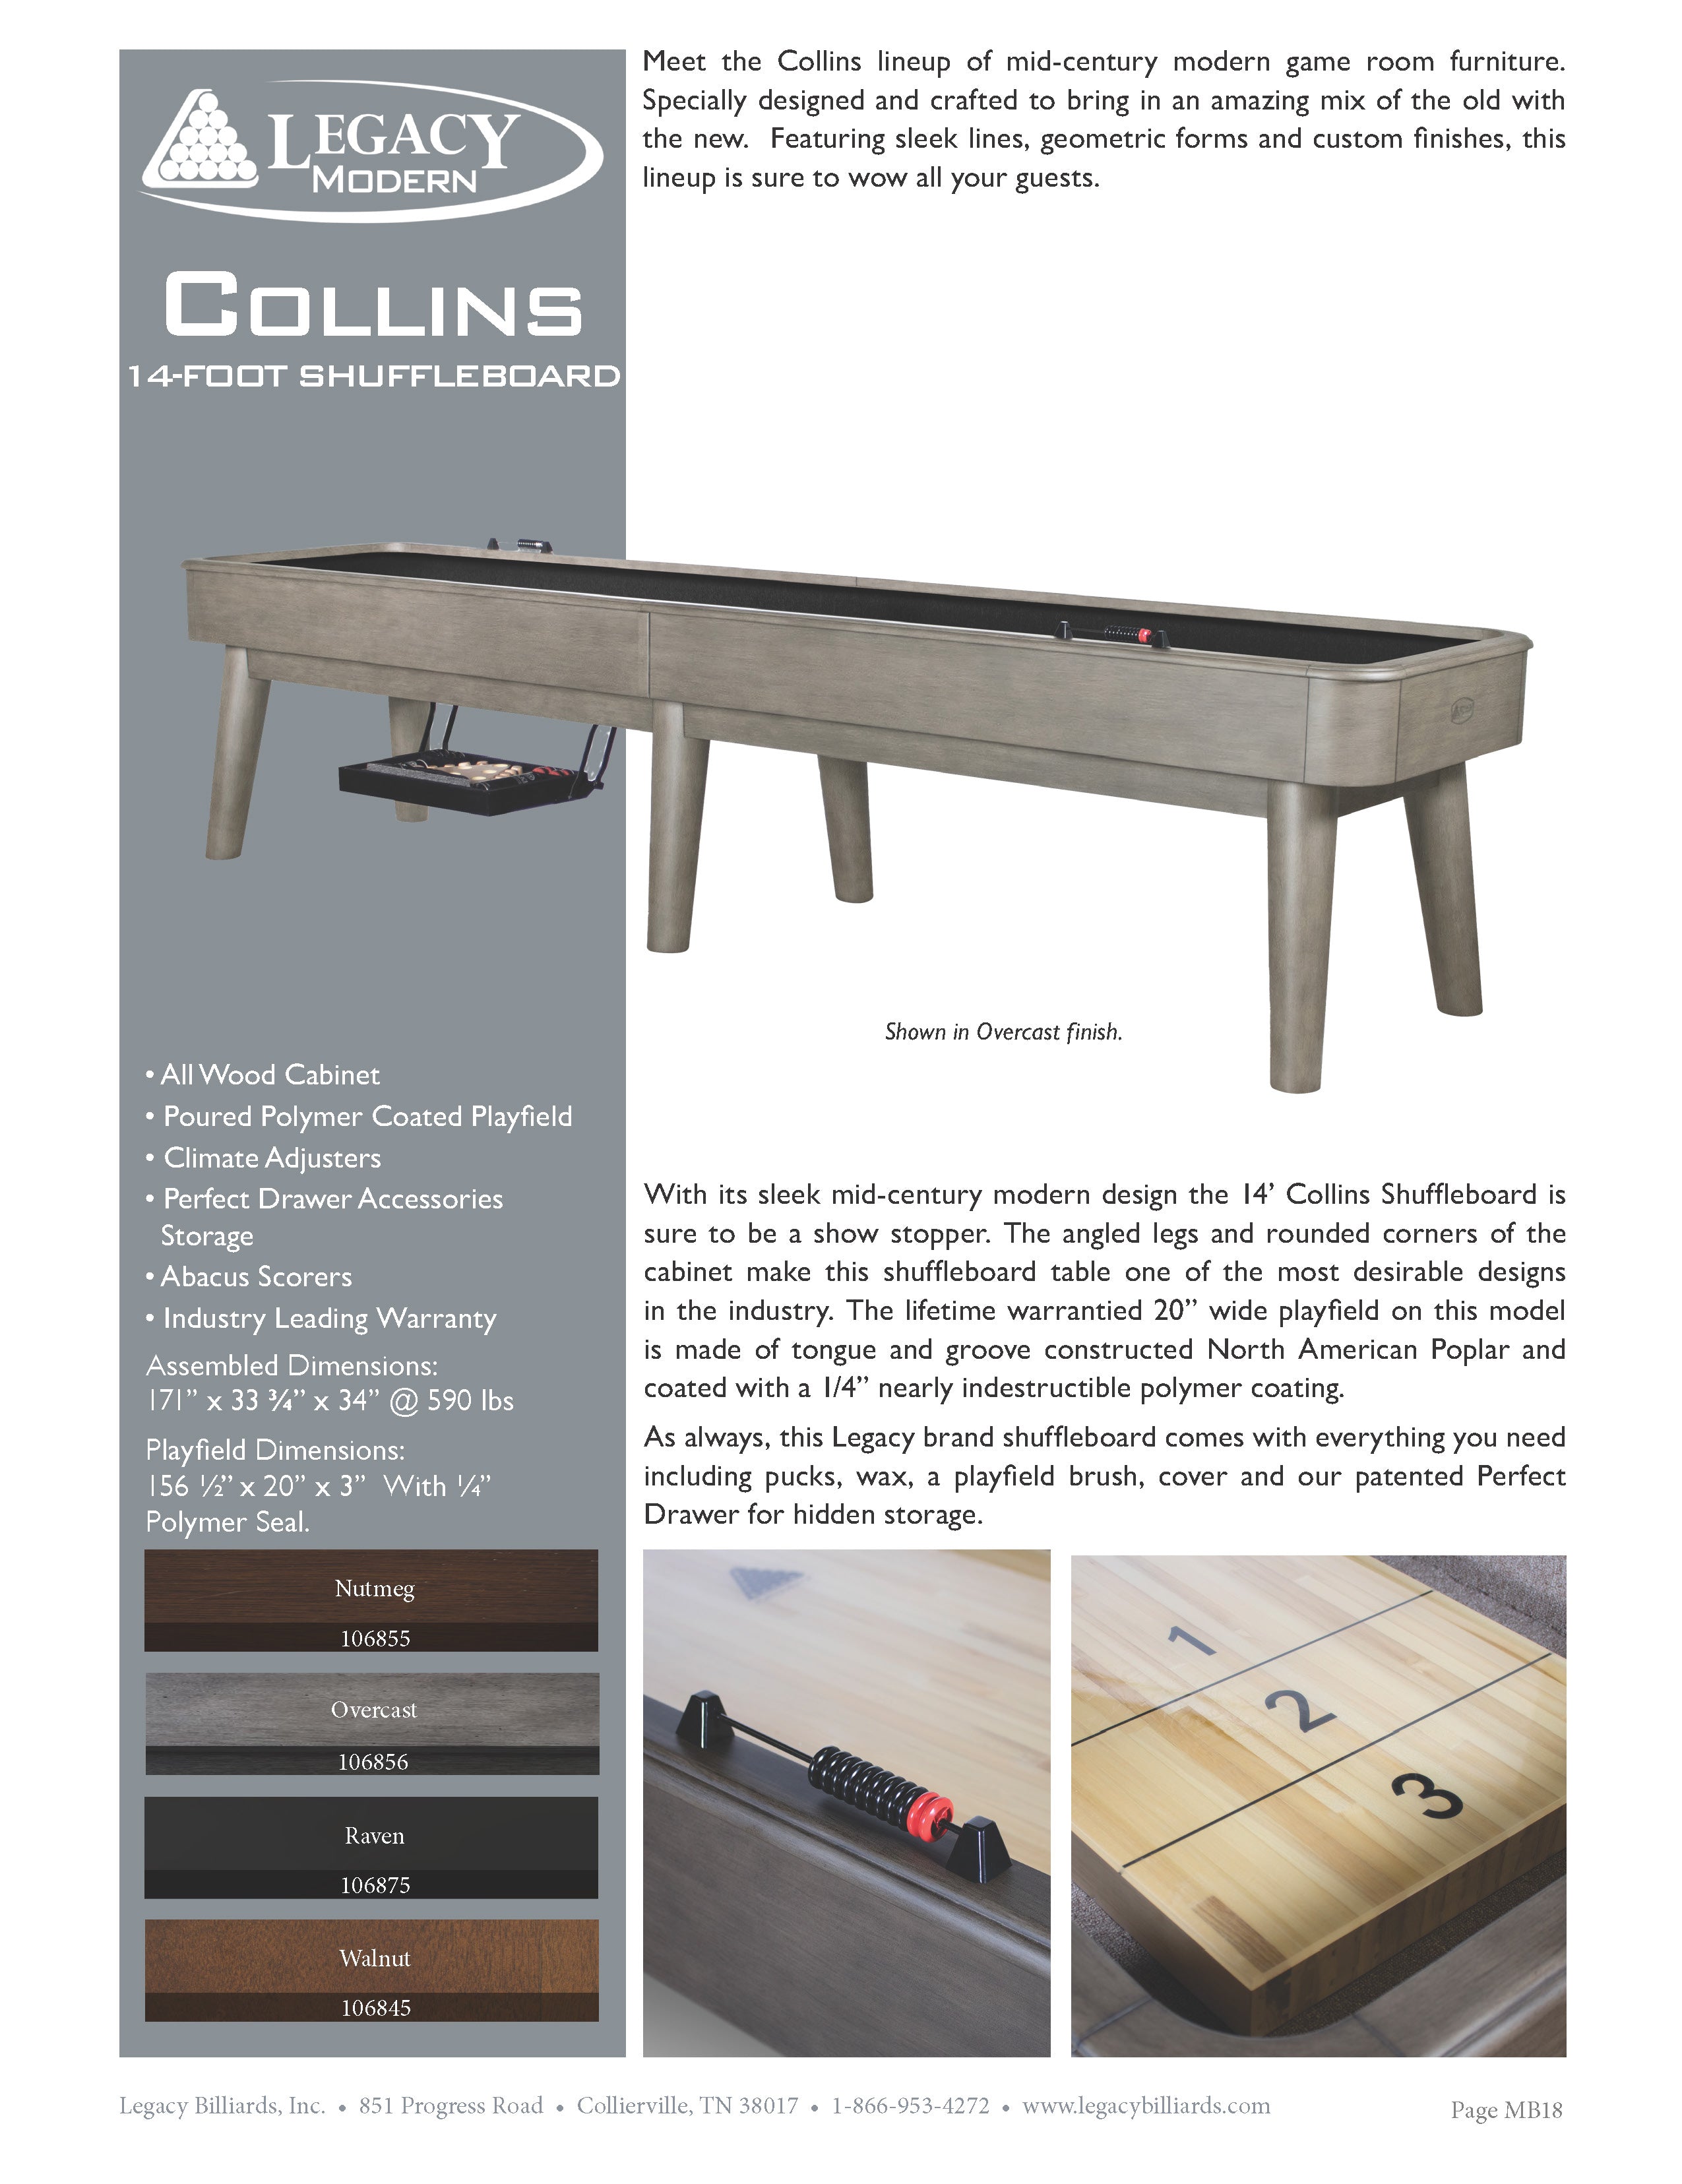 Collins 14' Shuffleboard Spec Sheet